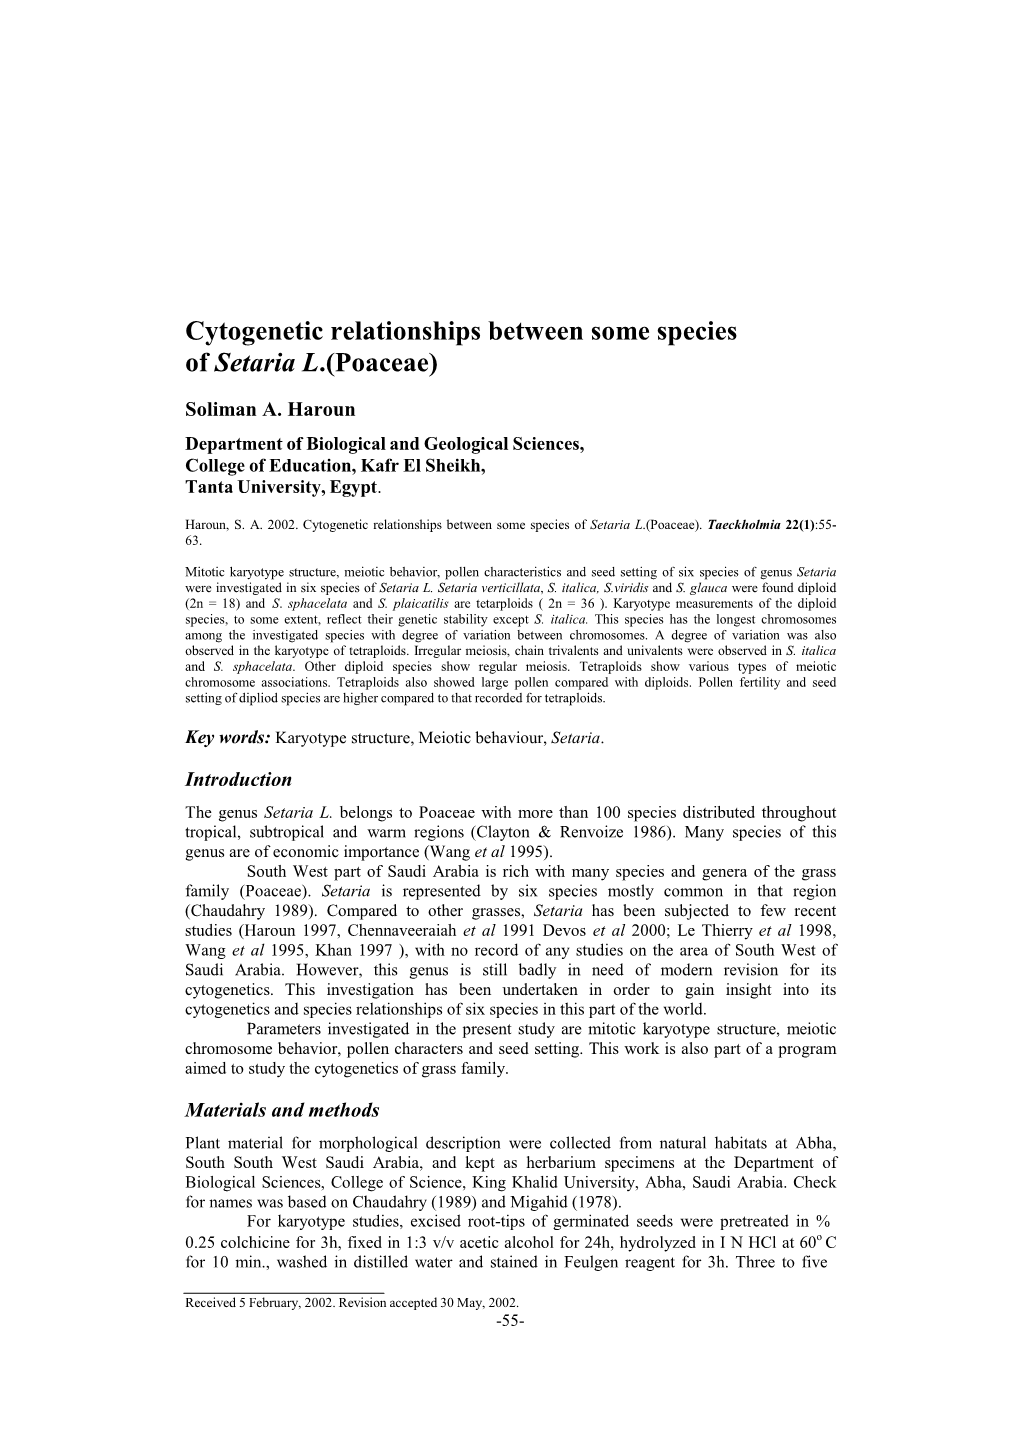 Cytogenetic Relationships Between Some Species of Setaria L.(Poaceae)